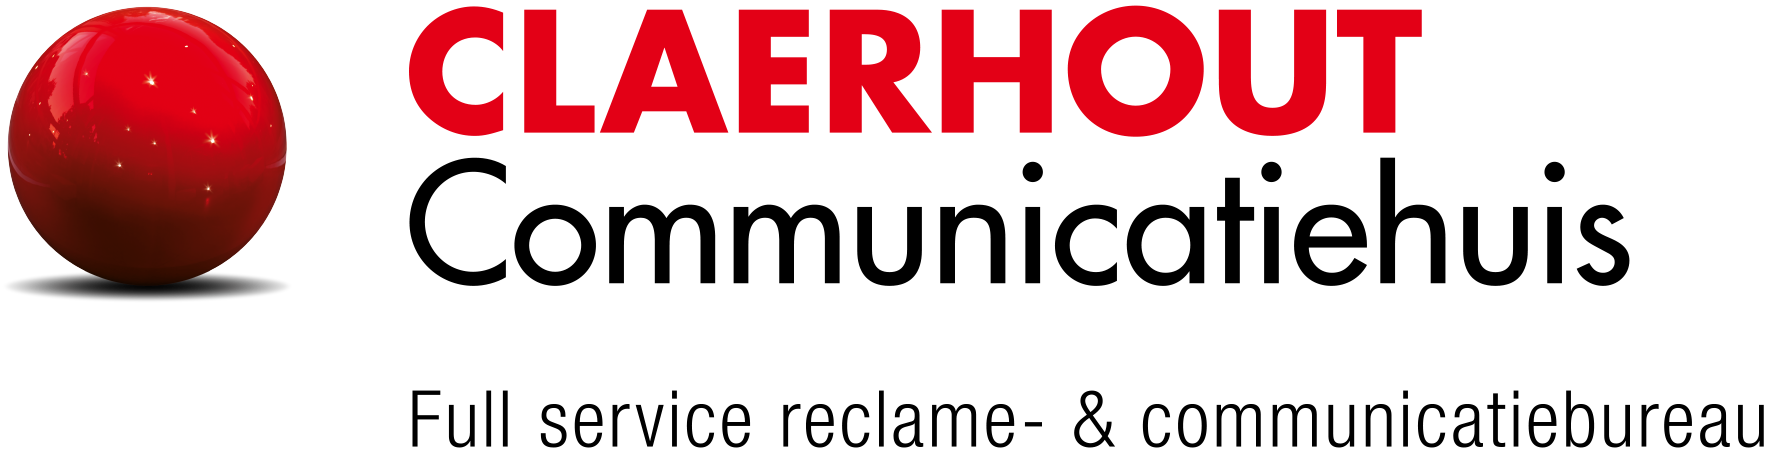 Claerhout nv Communicatiehuis - logo